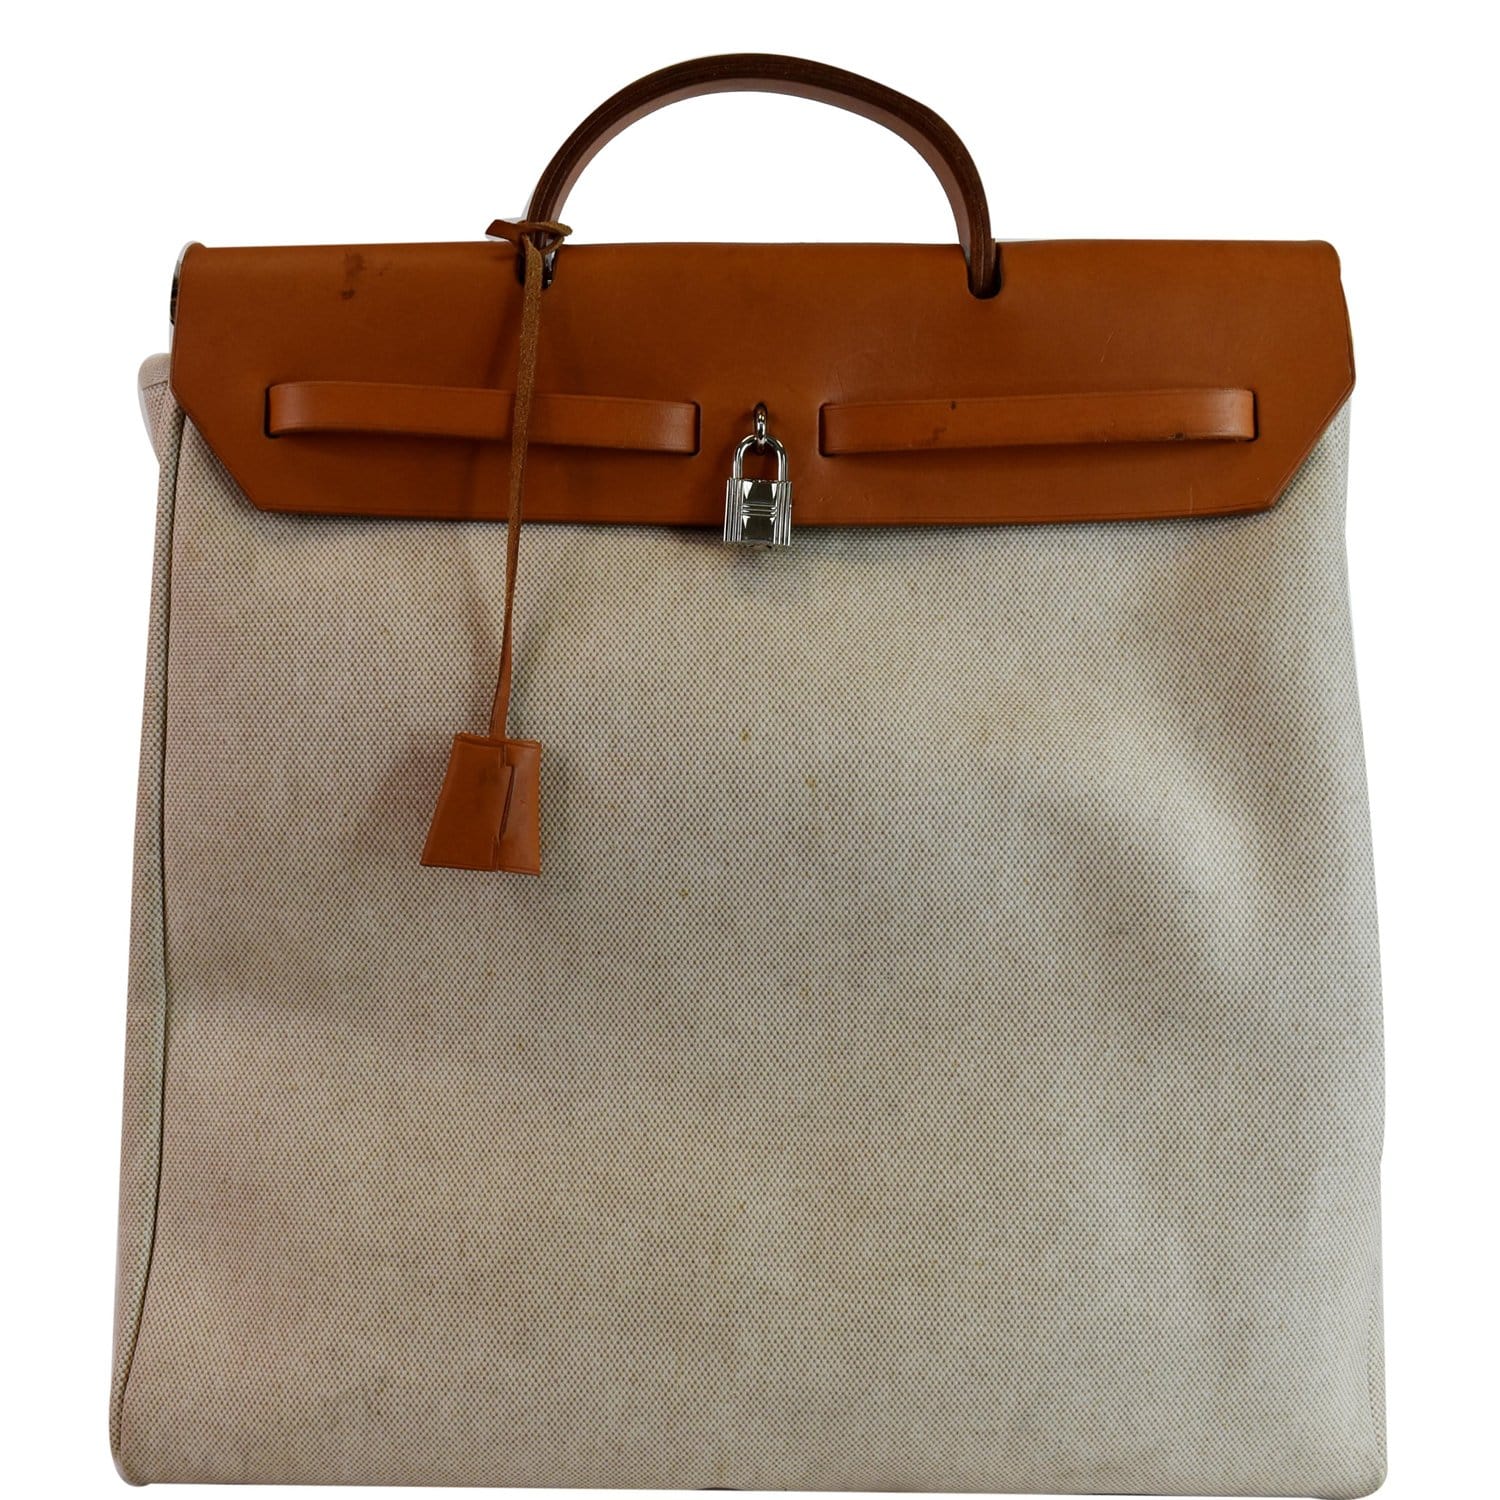 Hermes Herbag vegan leather handbag - ShopStyle Tote Bags